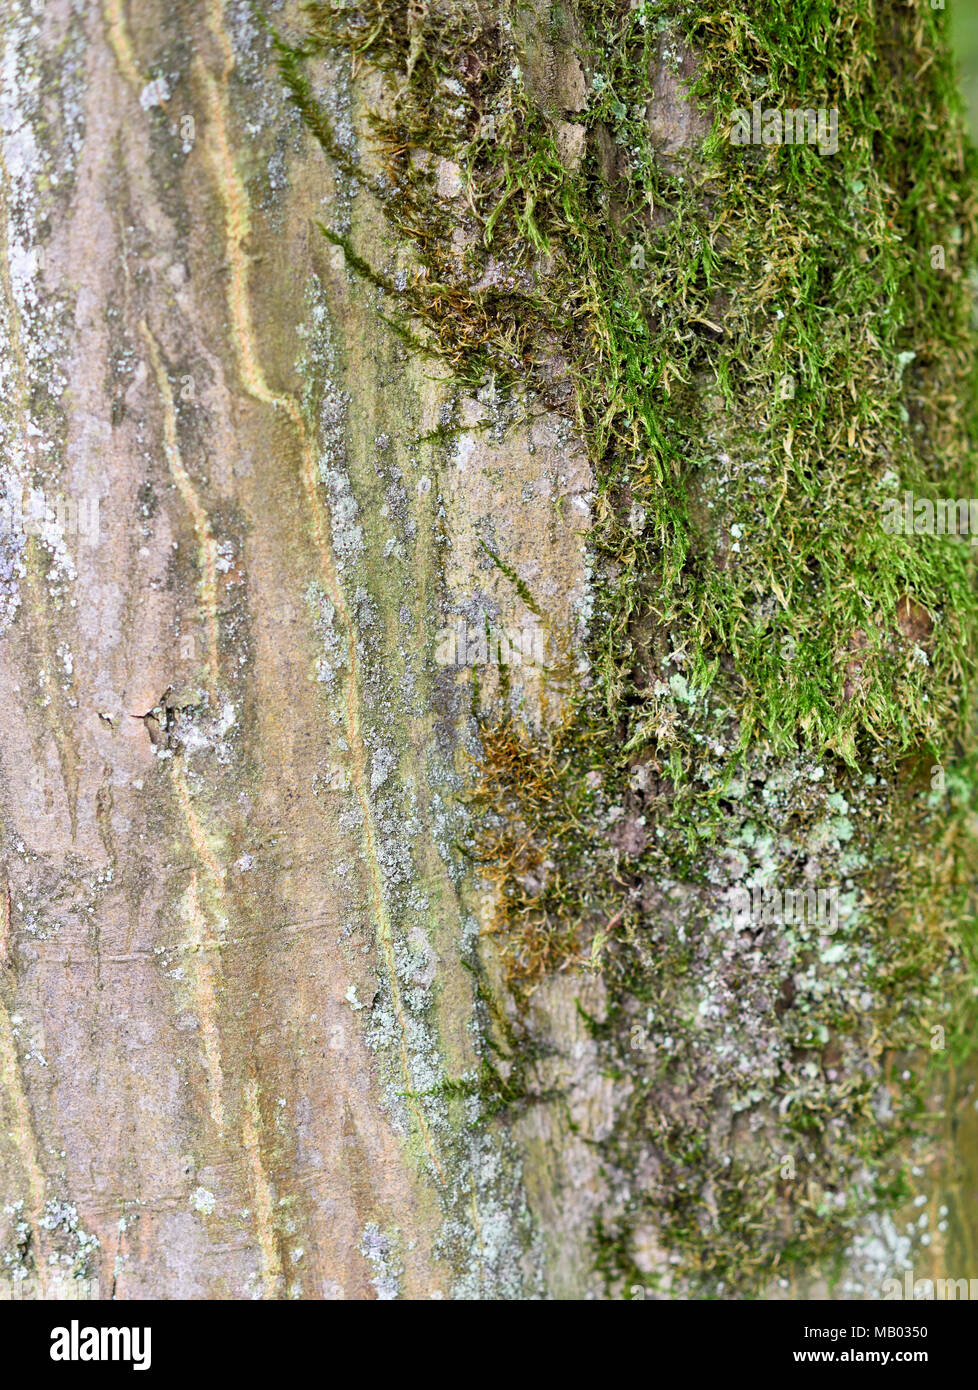 Oak tree trunk, bark texture or tree trunk background. Stock Photo